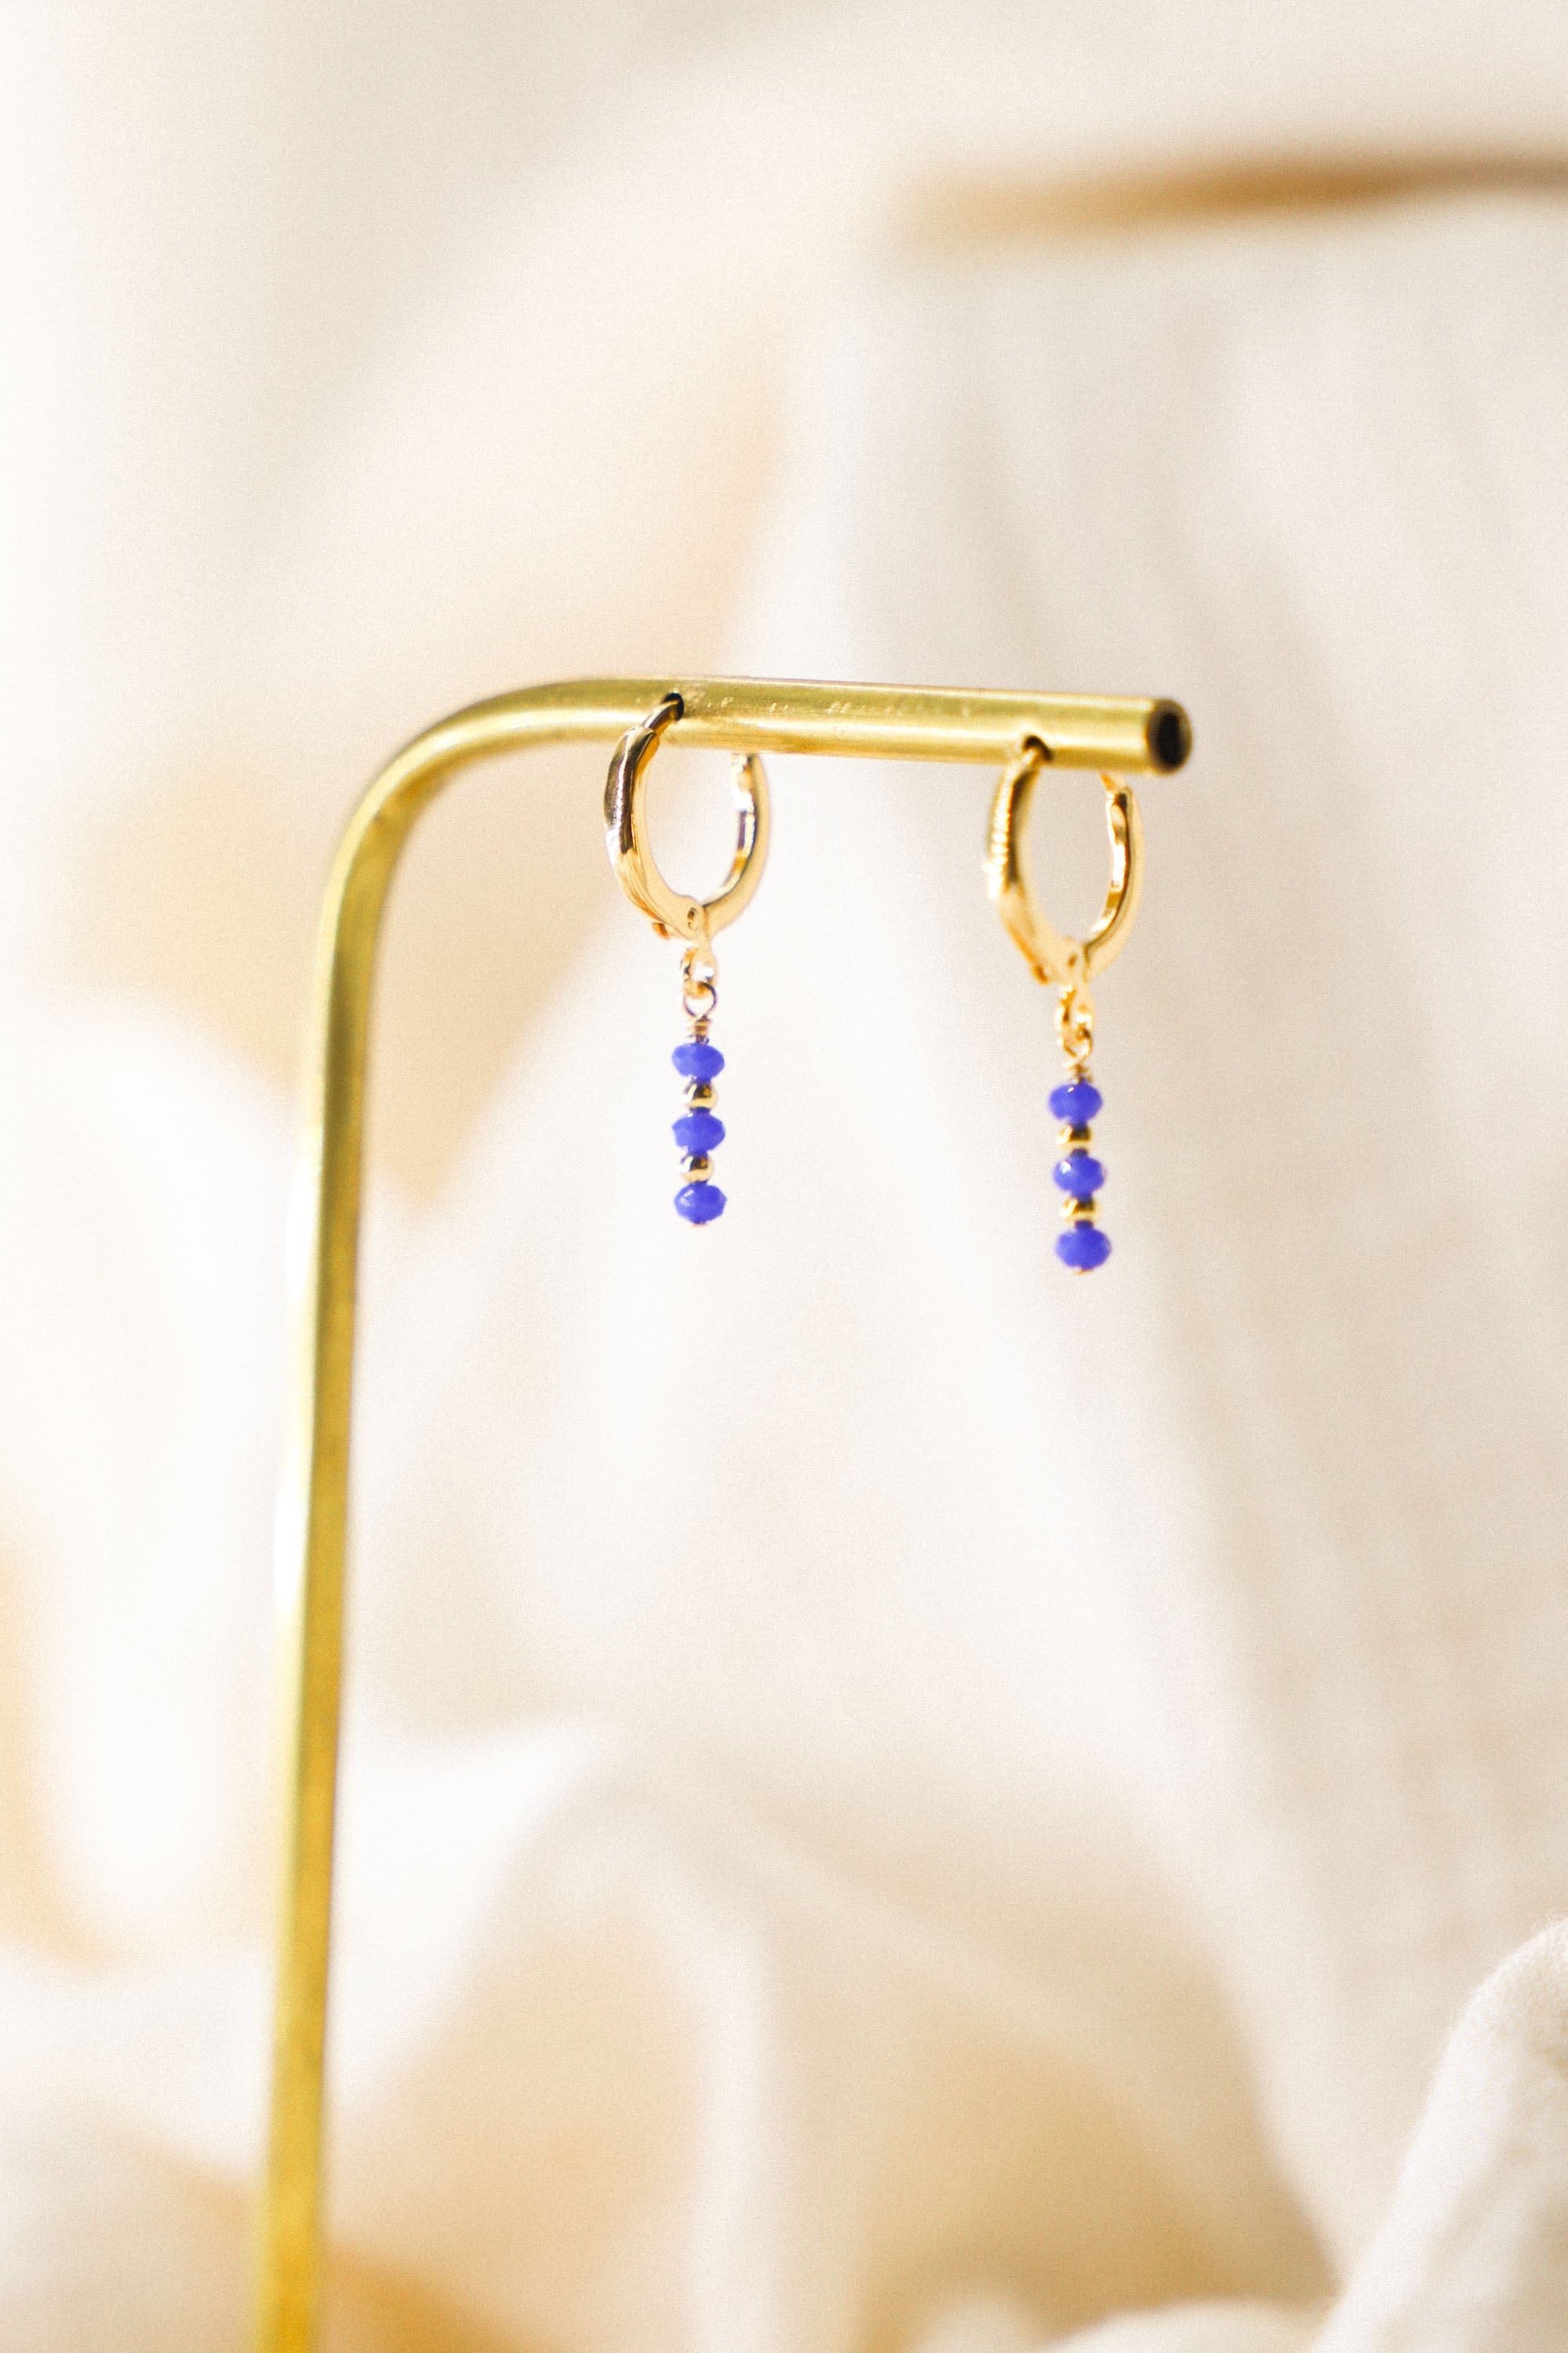 Boucles d'oreilles Ibiza avec perles bleues. Plaqué or 24 carats.